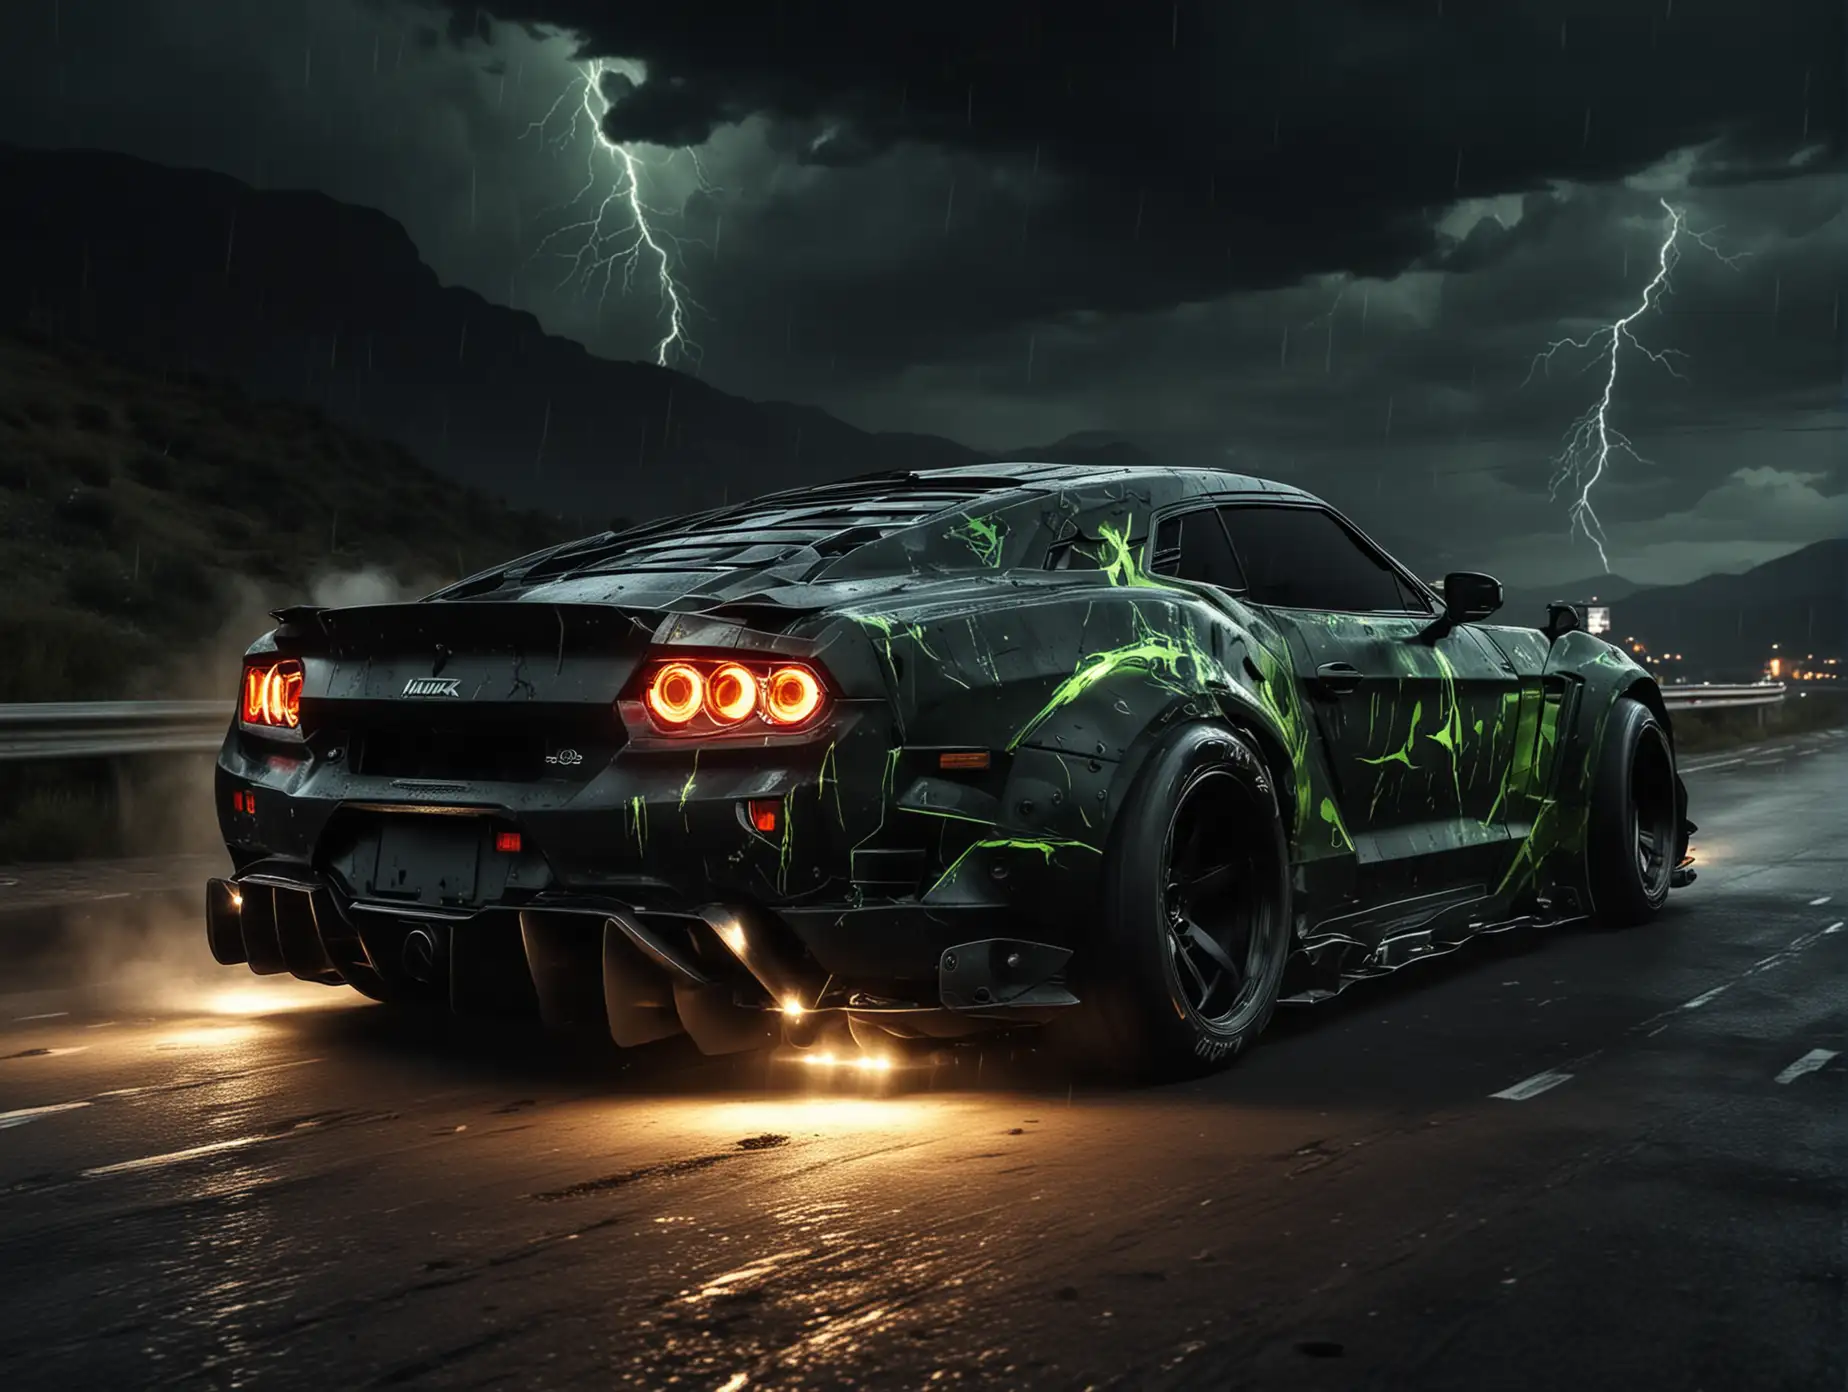 Futuristic-Hulk-Evil-Drifting-Cars-Racing-Downhill-at-Night